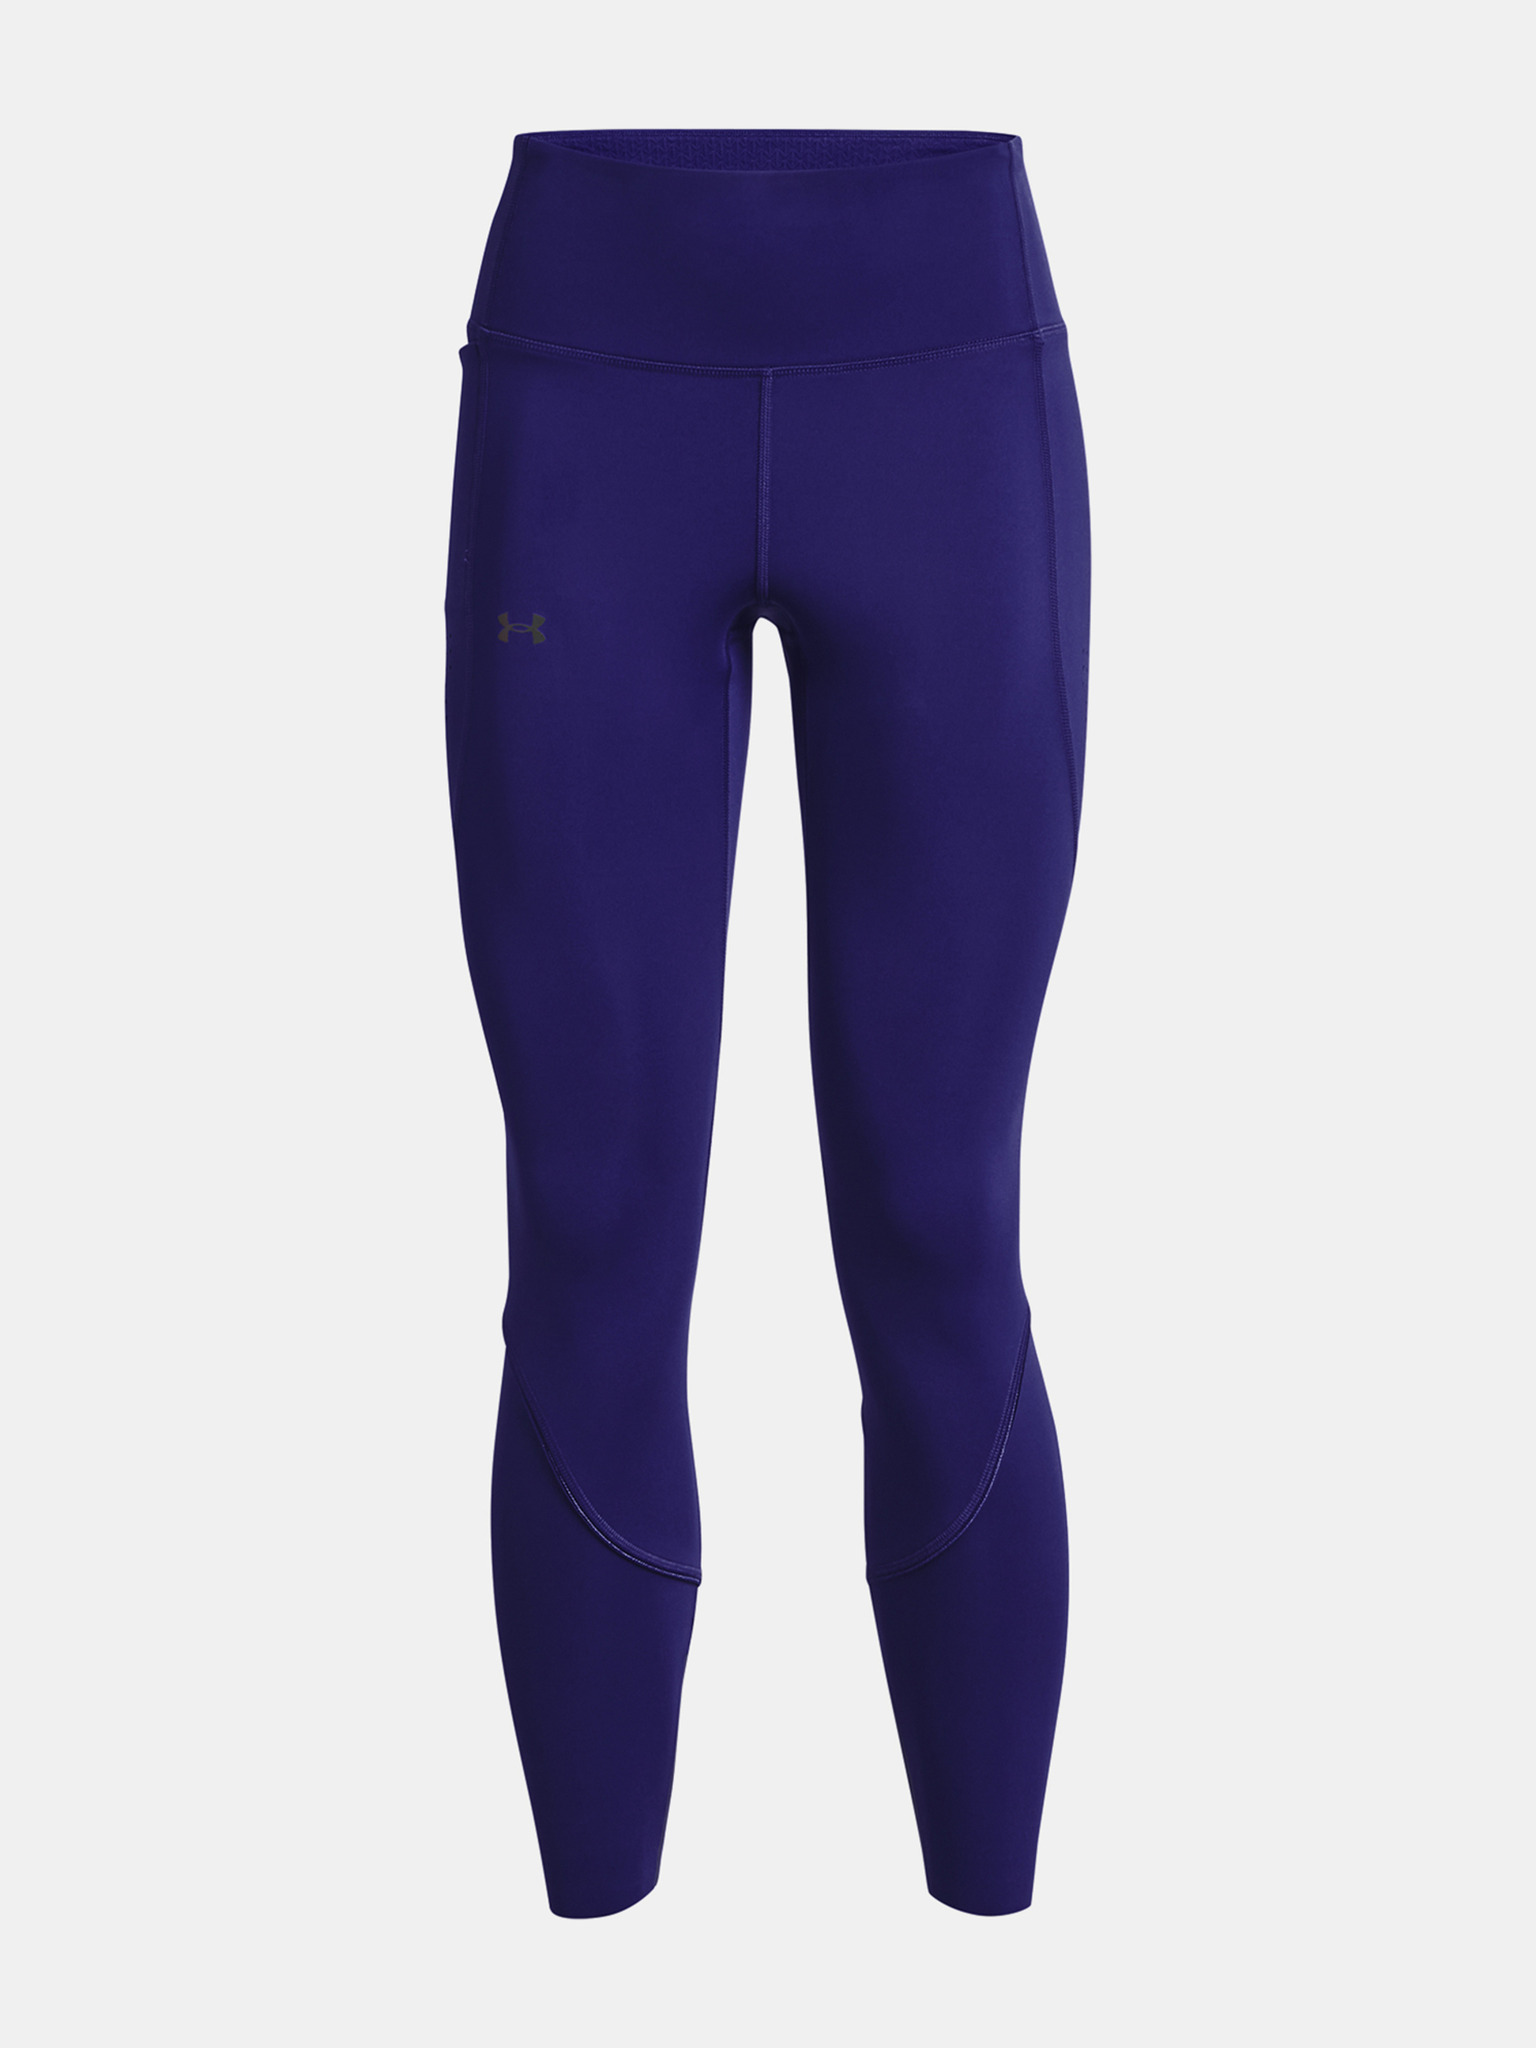 Womens compression 7/8 leggings Under Armour ARMOUR LEGGING W purple